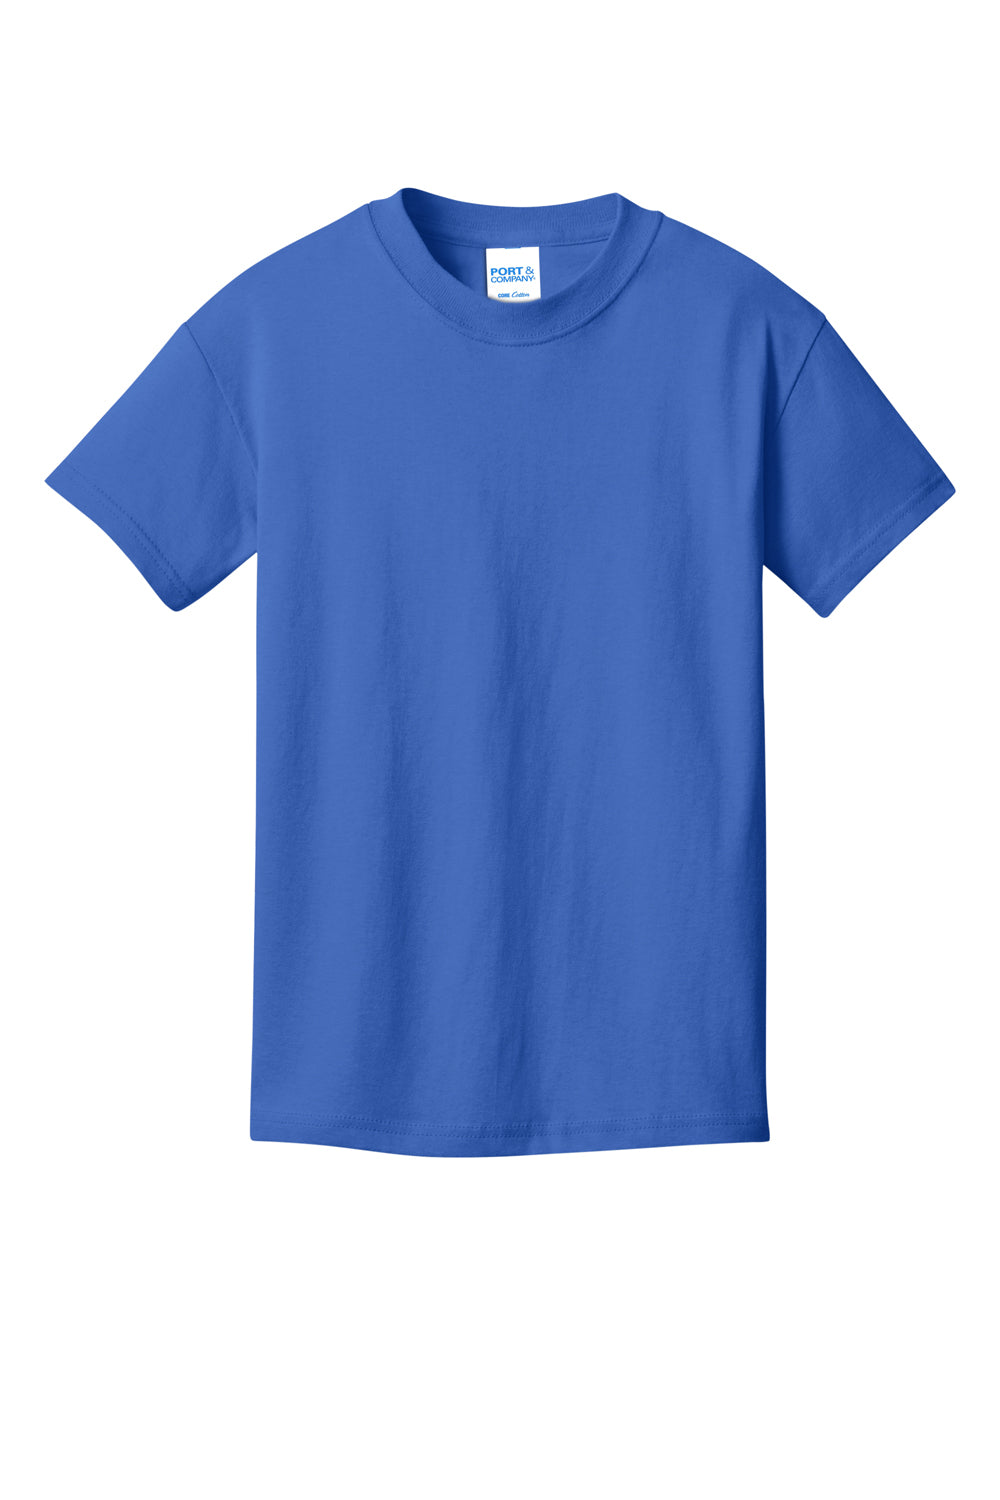 Port & Company PC54YDTG Core Cotton DTG Short Sleeve Crewneck T-Shirt Royal Blue Flat Front